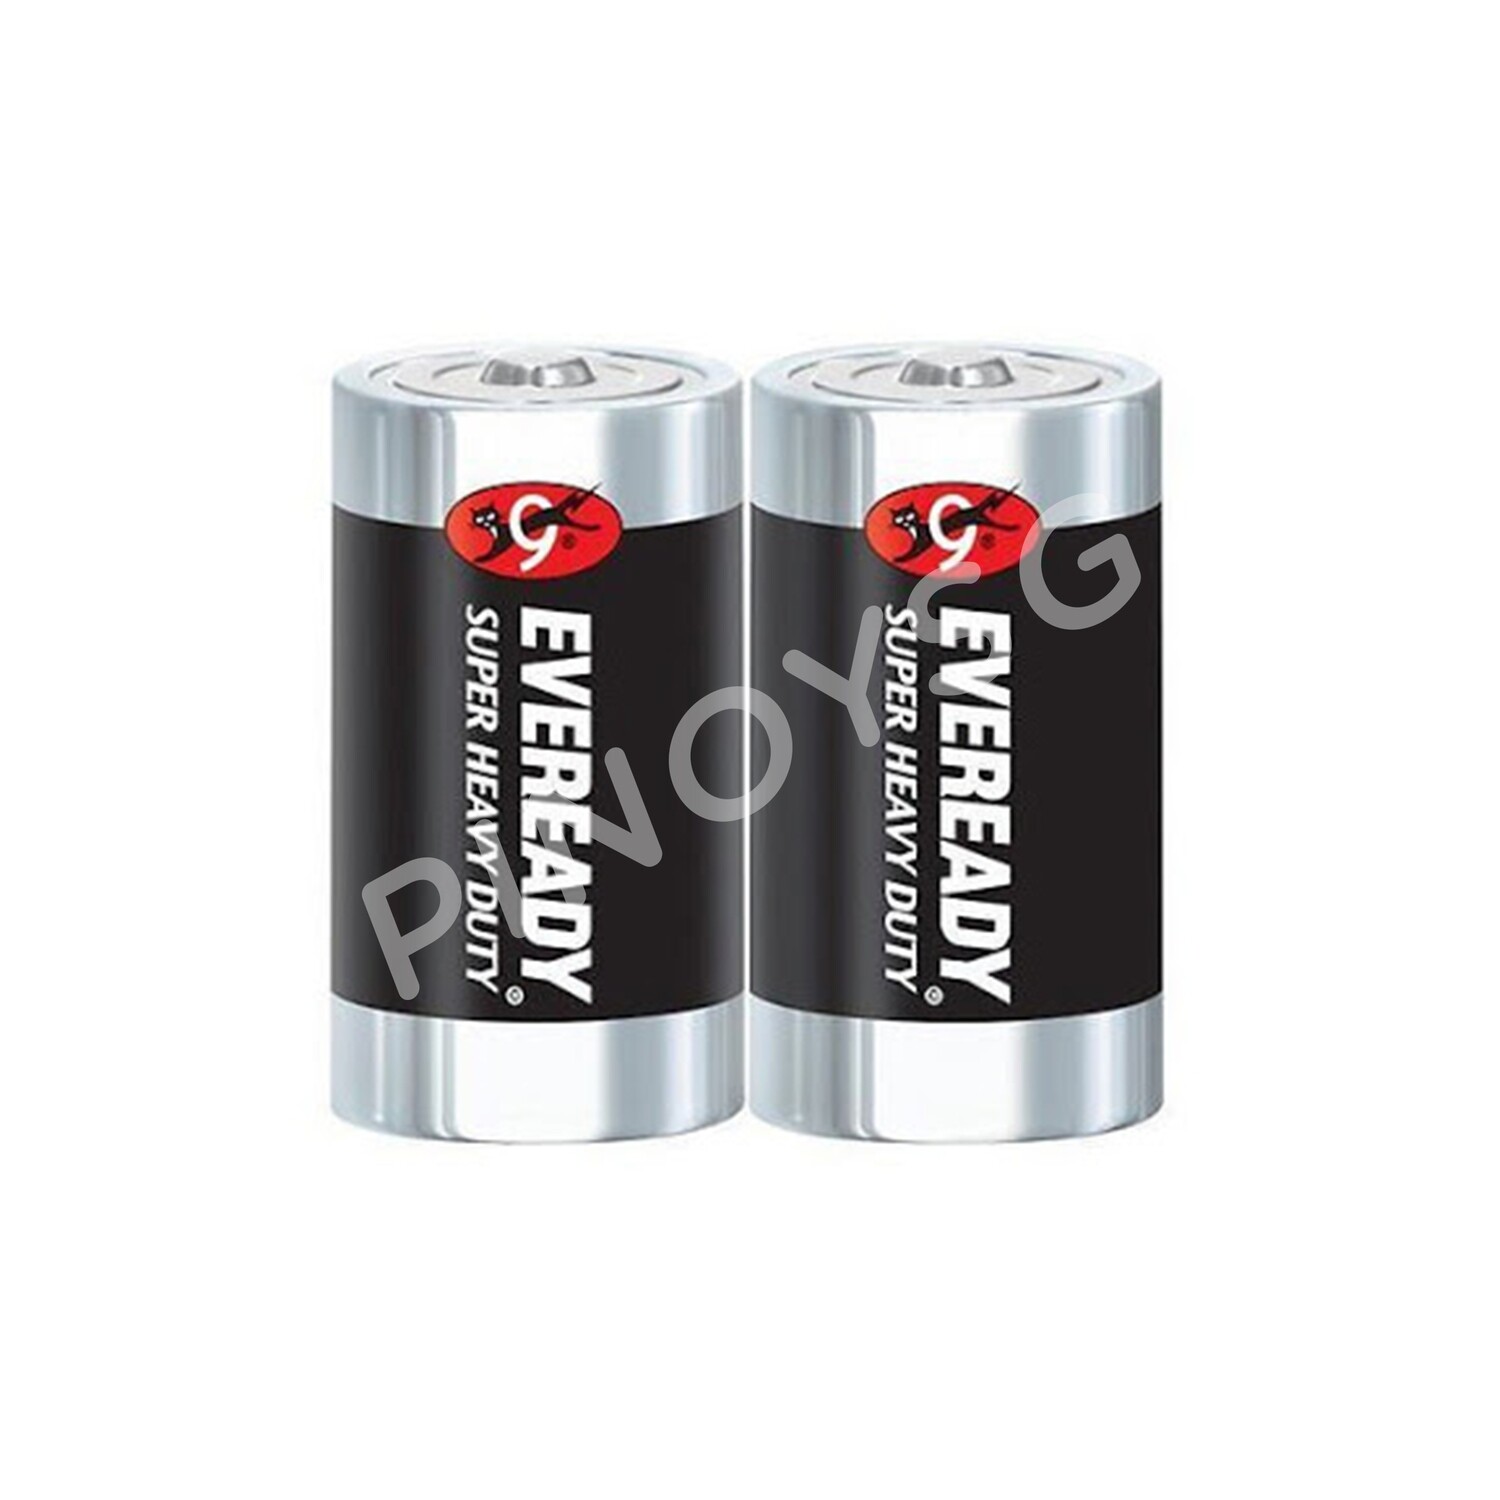 Eveready D Battery R20 1.5V, 2 pcs